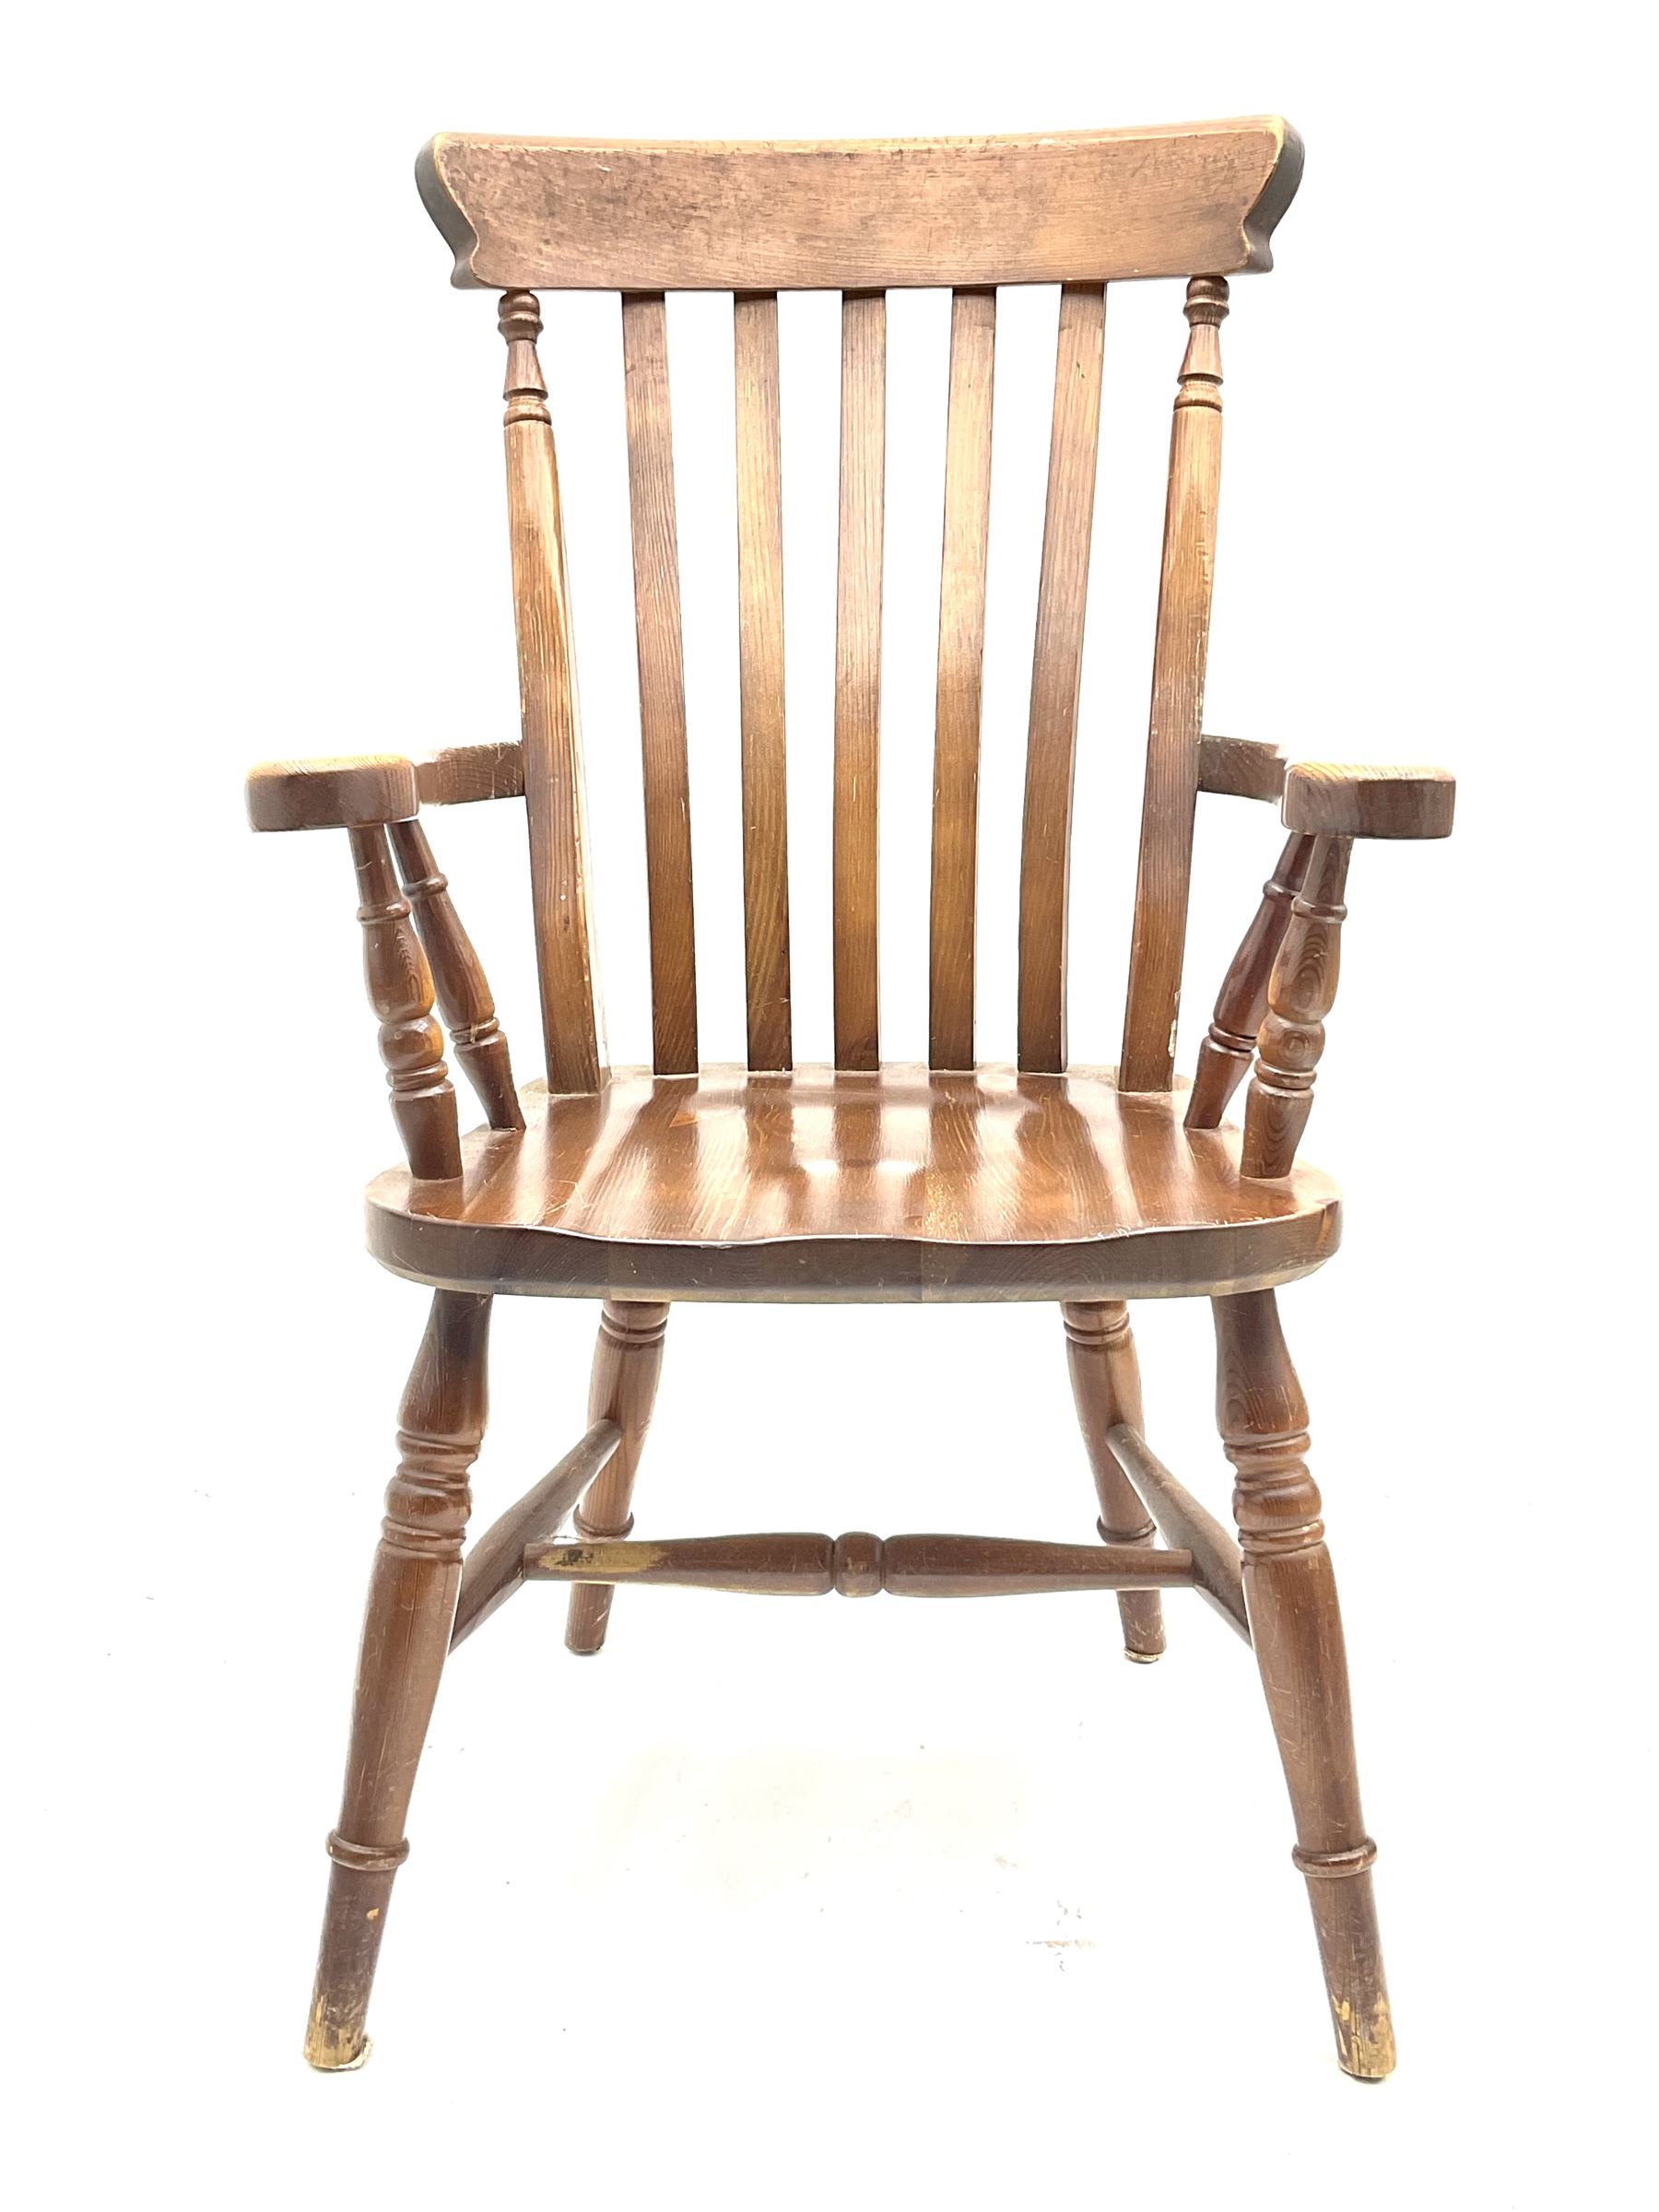 20th century polished pine farmhouse style armchair